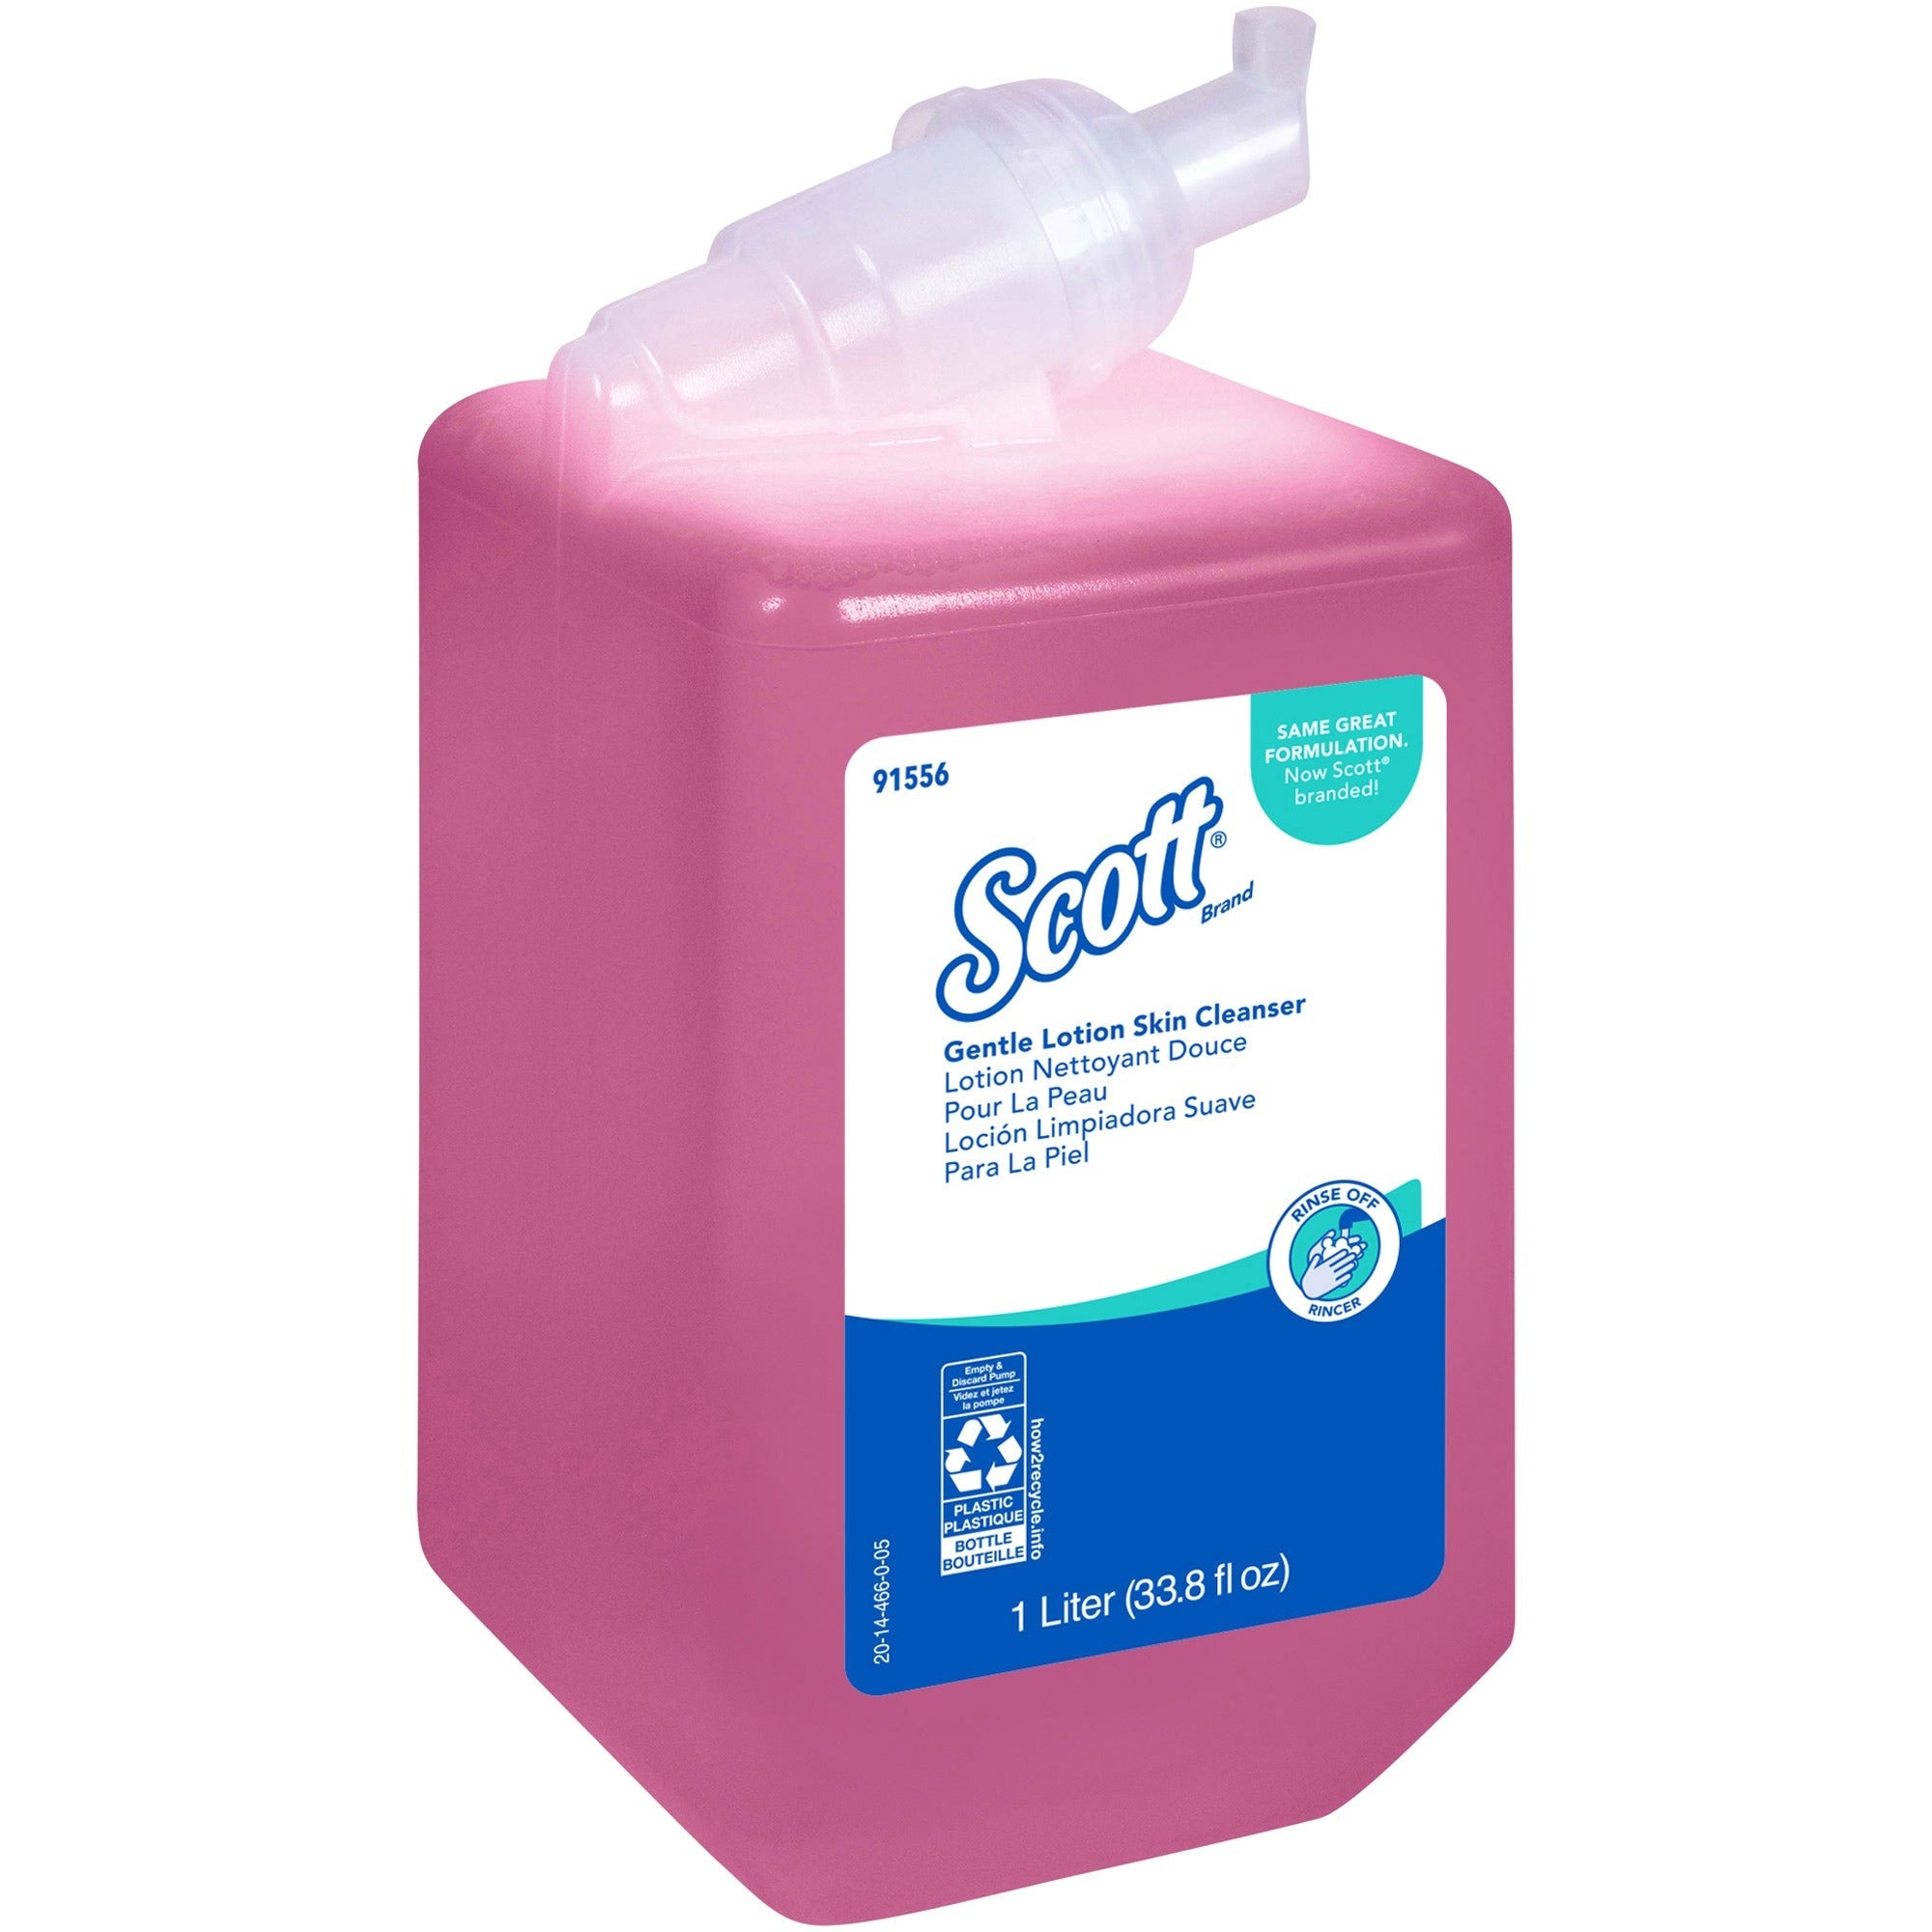 scott-gentle-lotion-skin-cleanser-lotion-106-quart-push-pump-for-normal-skin-ph-balanced-6-carton_kcc91556ct - 1